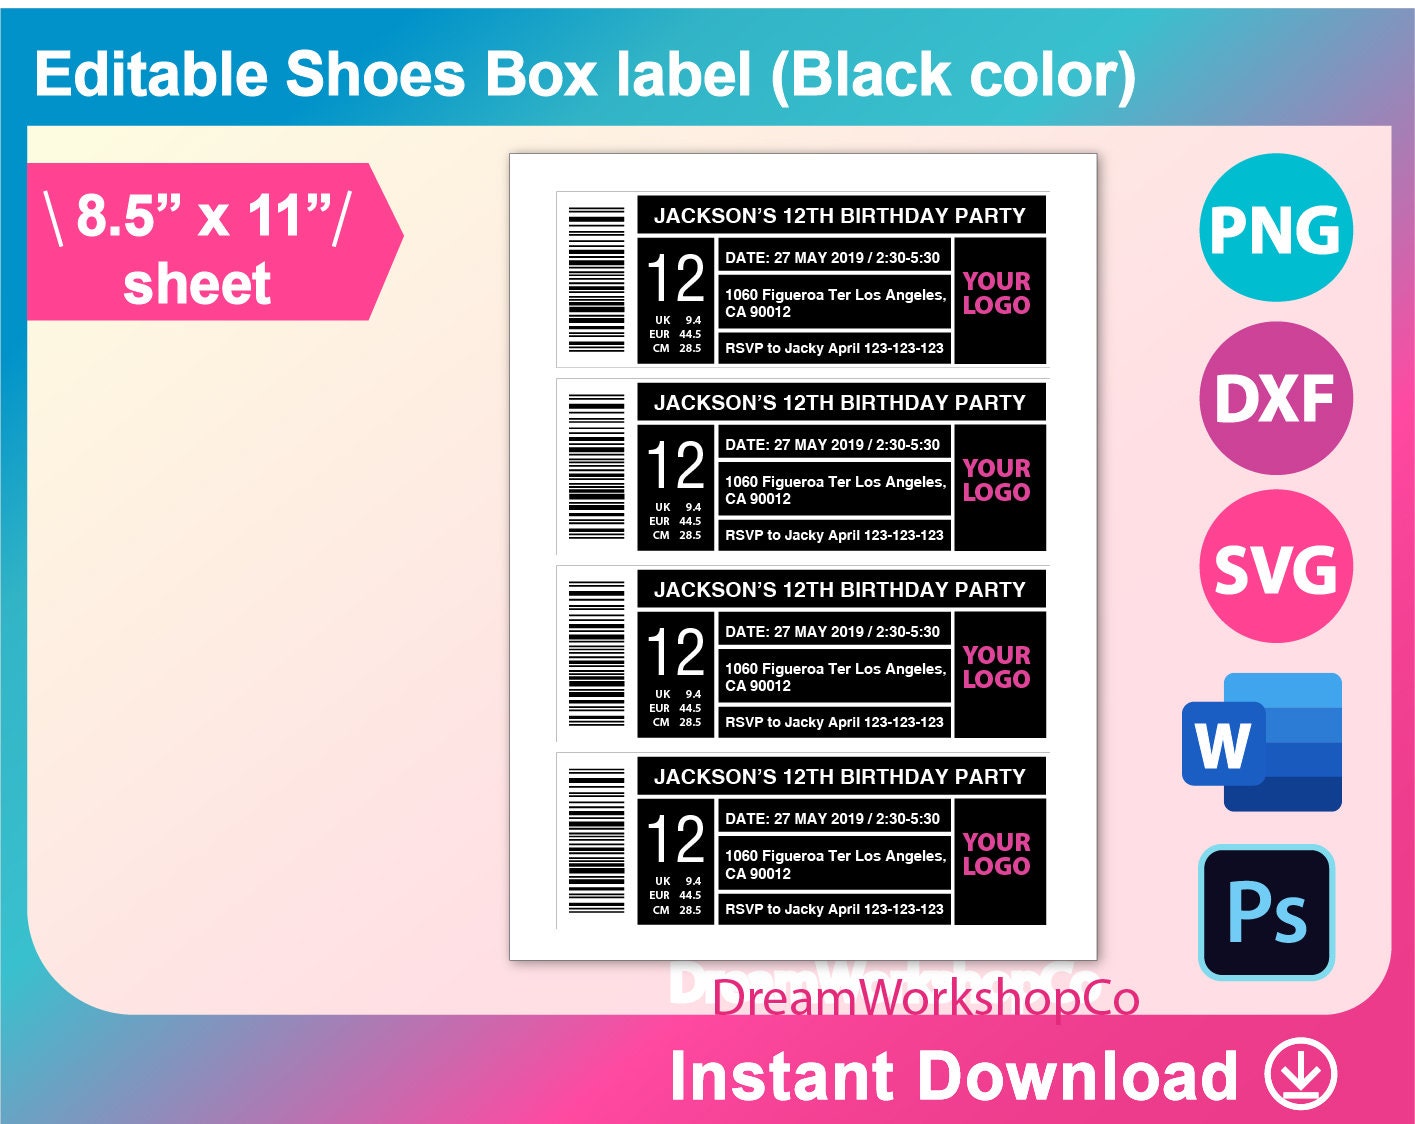 Shoe Box Label Template Shoe Box Label SVG Label Template -   Label  templates, Printable label templates, Personalized labels